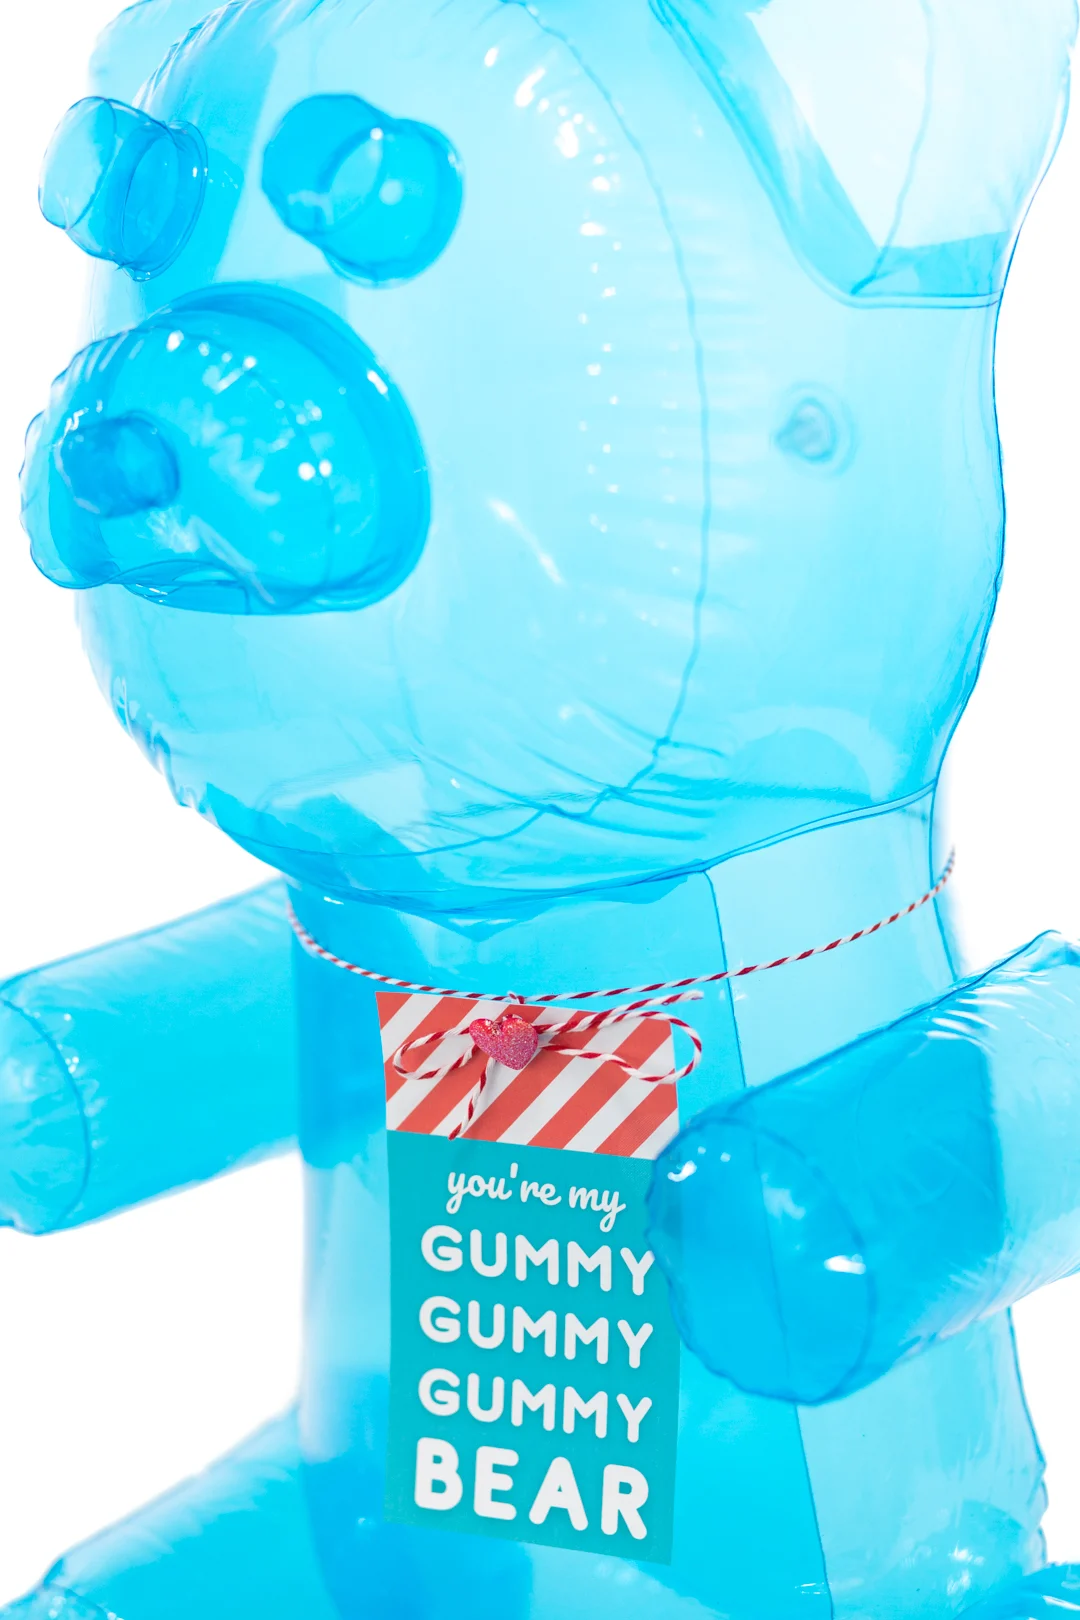 big blue inflatable gummy bear with printable gift tag for gifting